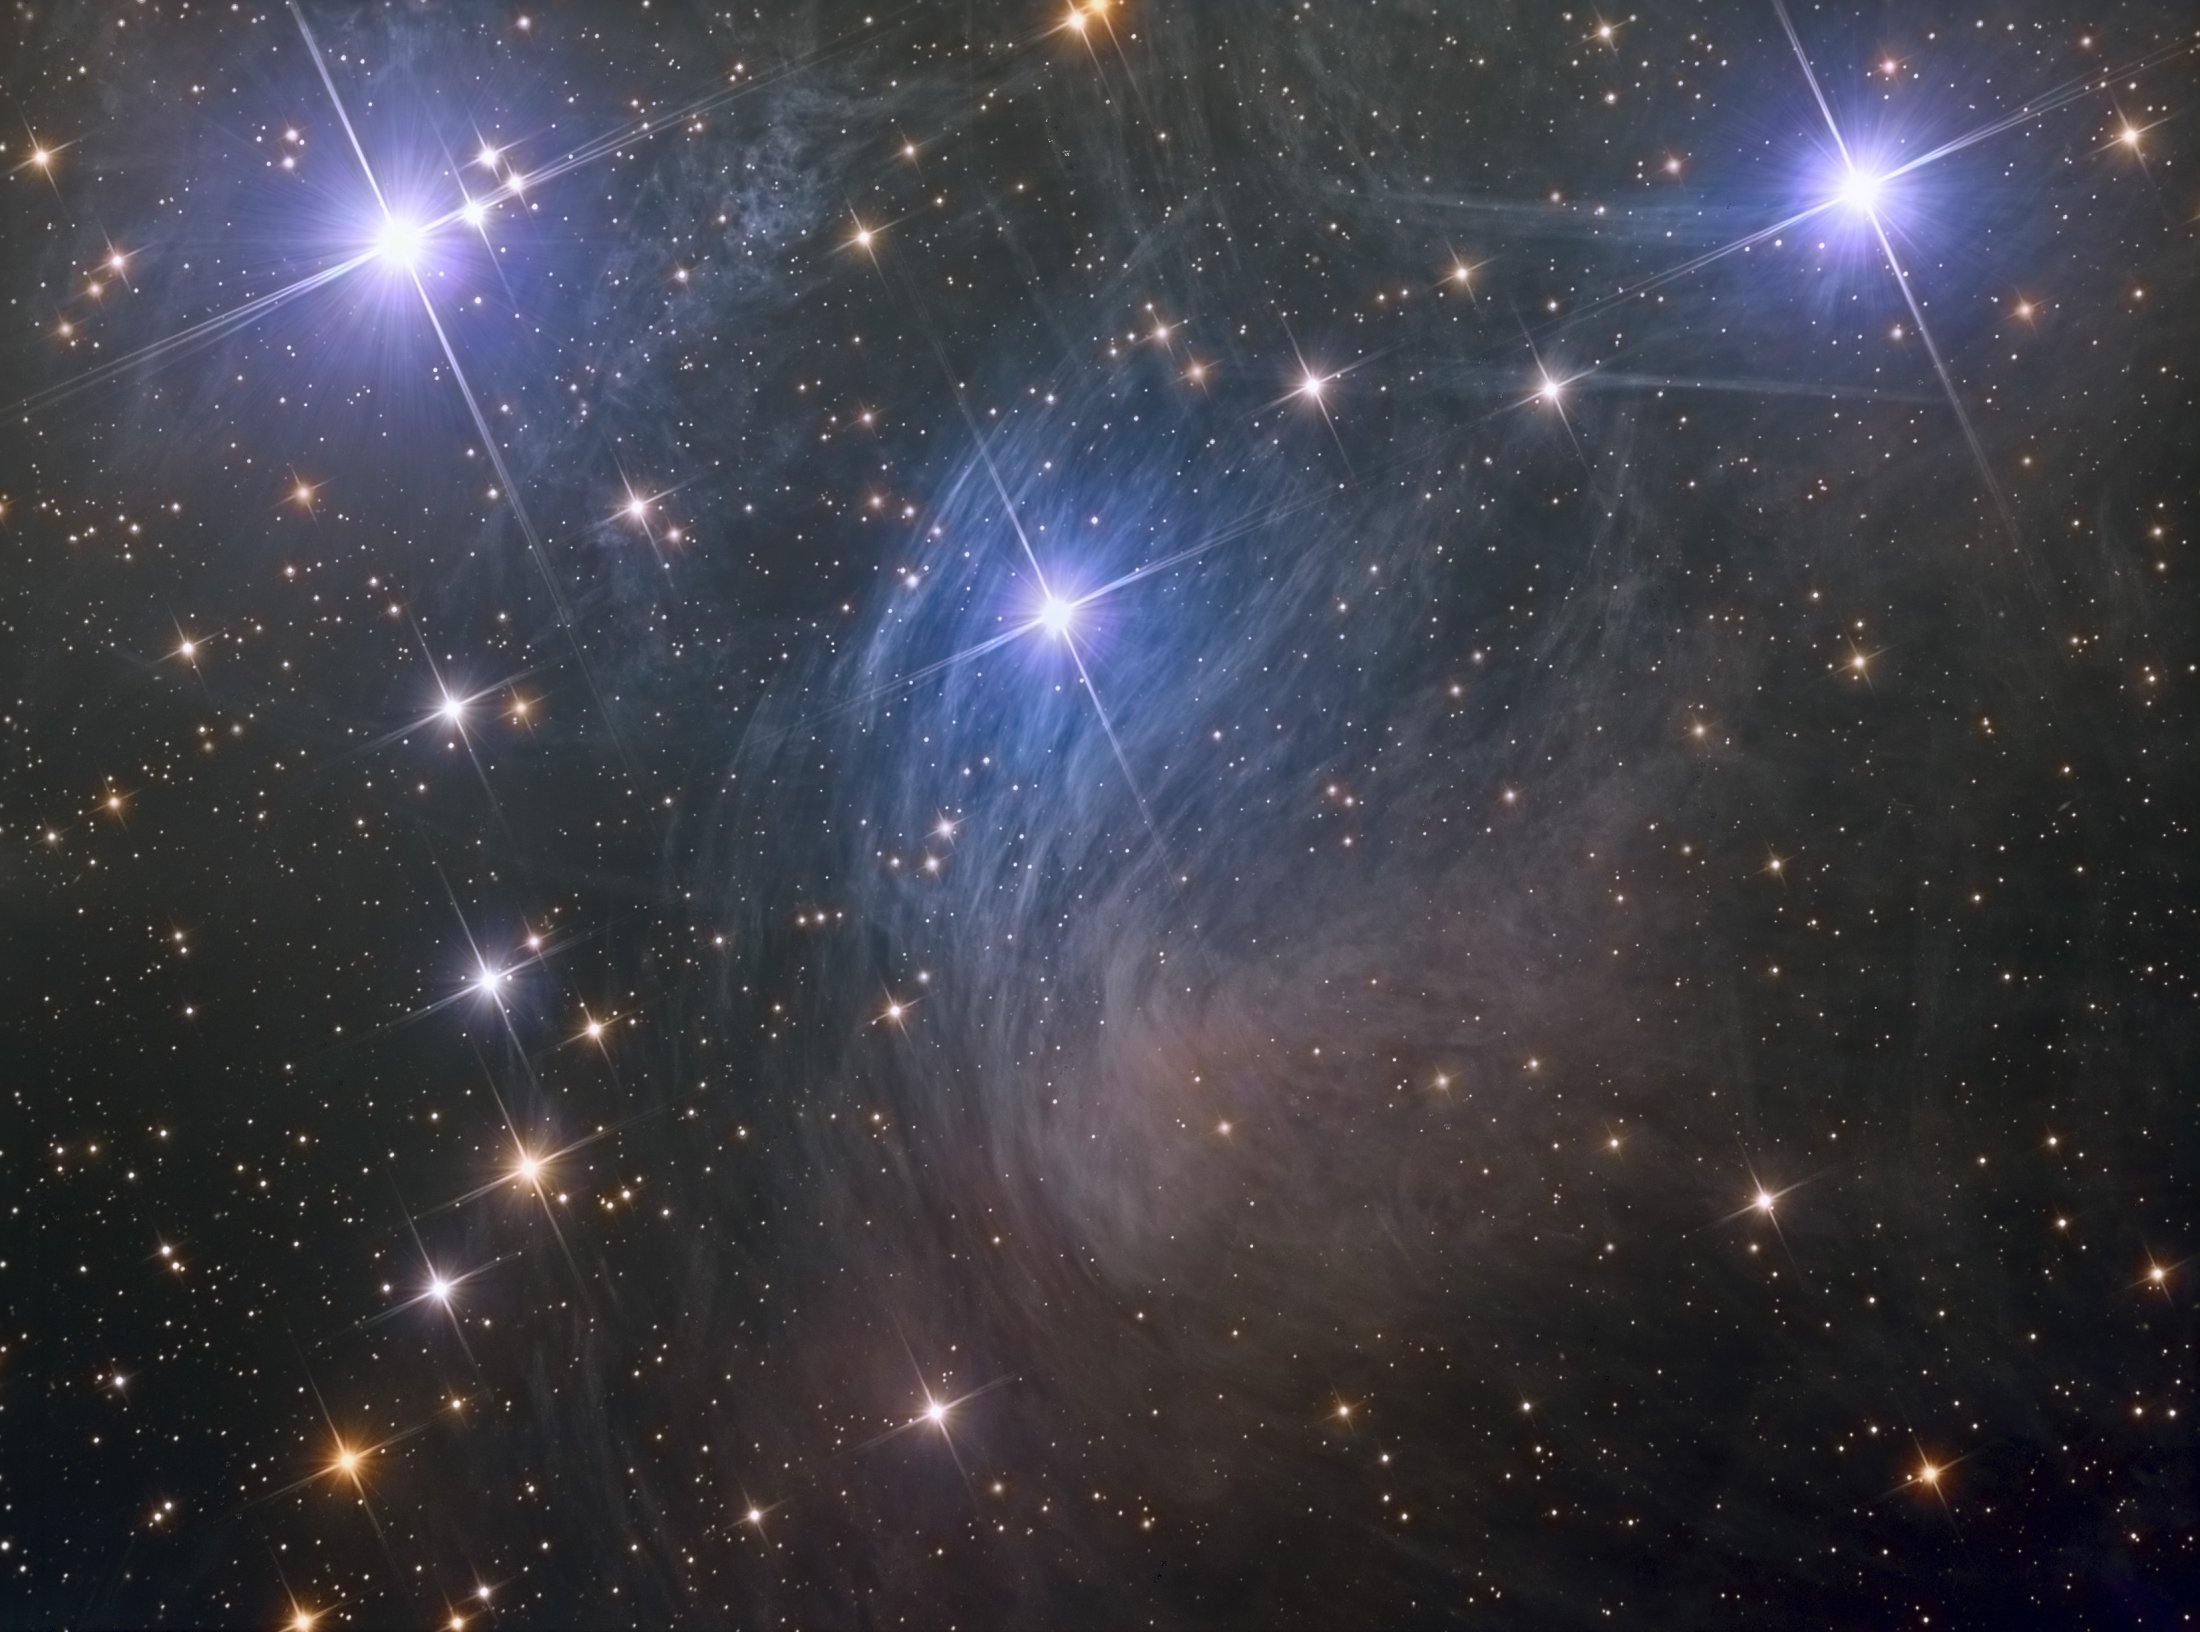 M45 Pleiades Star Cluster